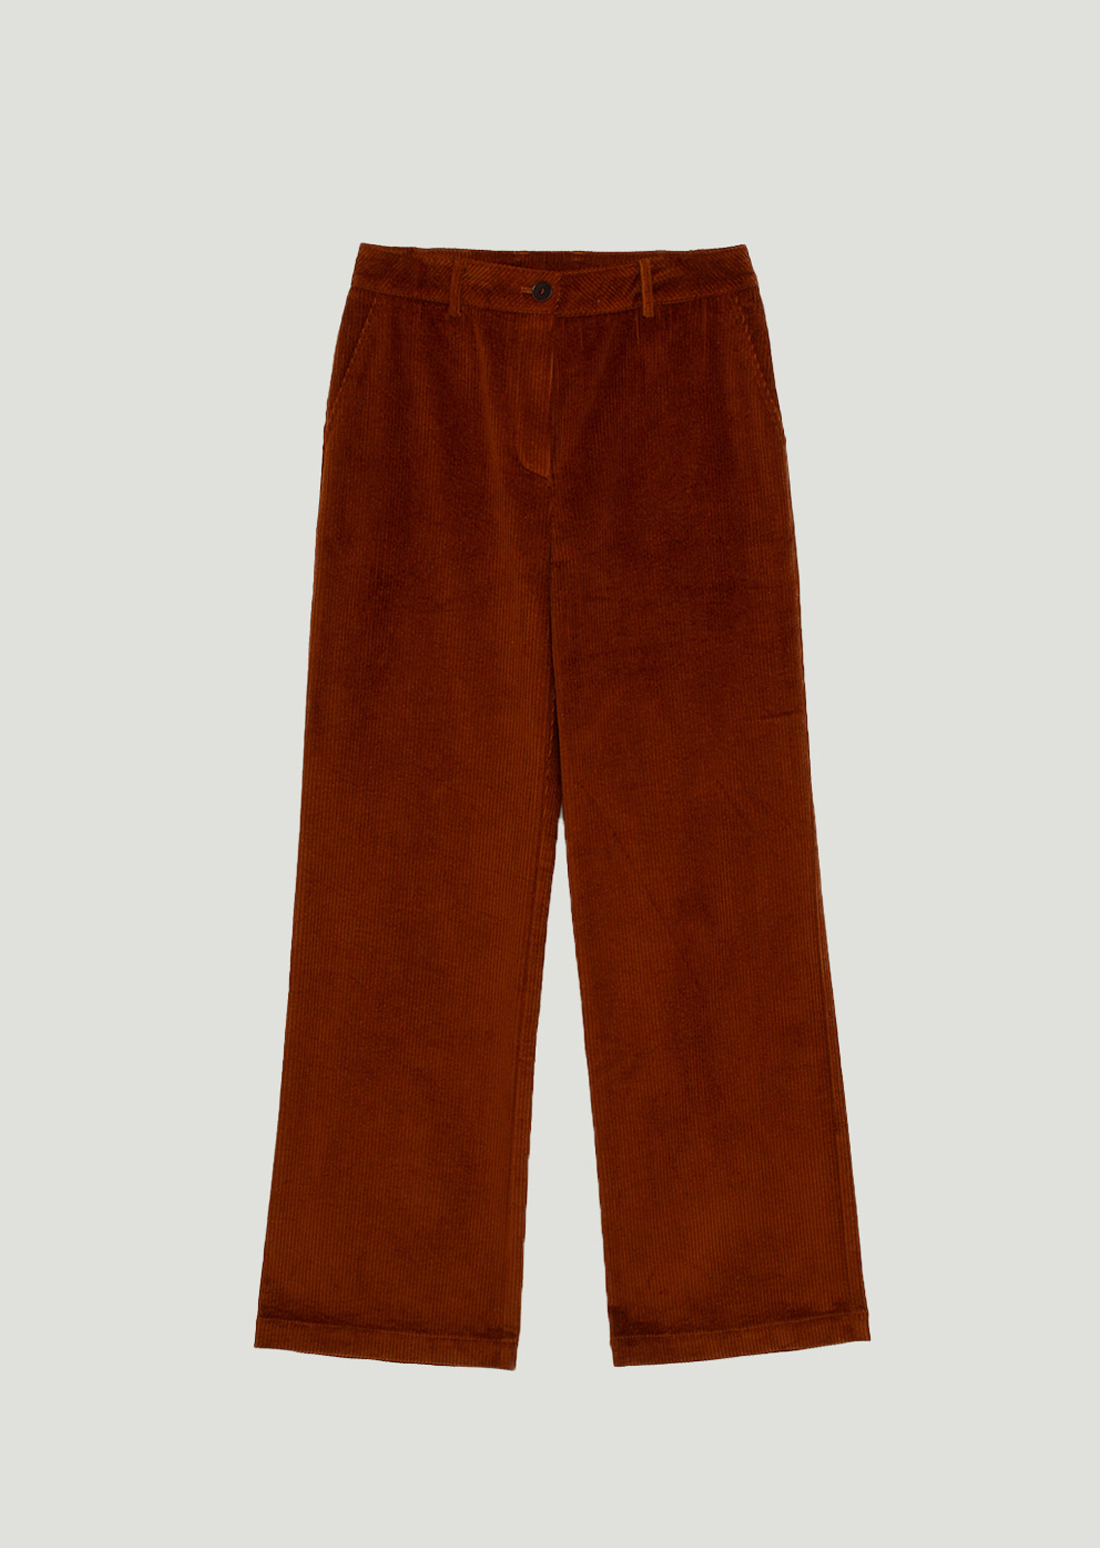 Retro Corduroy Pants (Orange Brown)